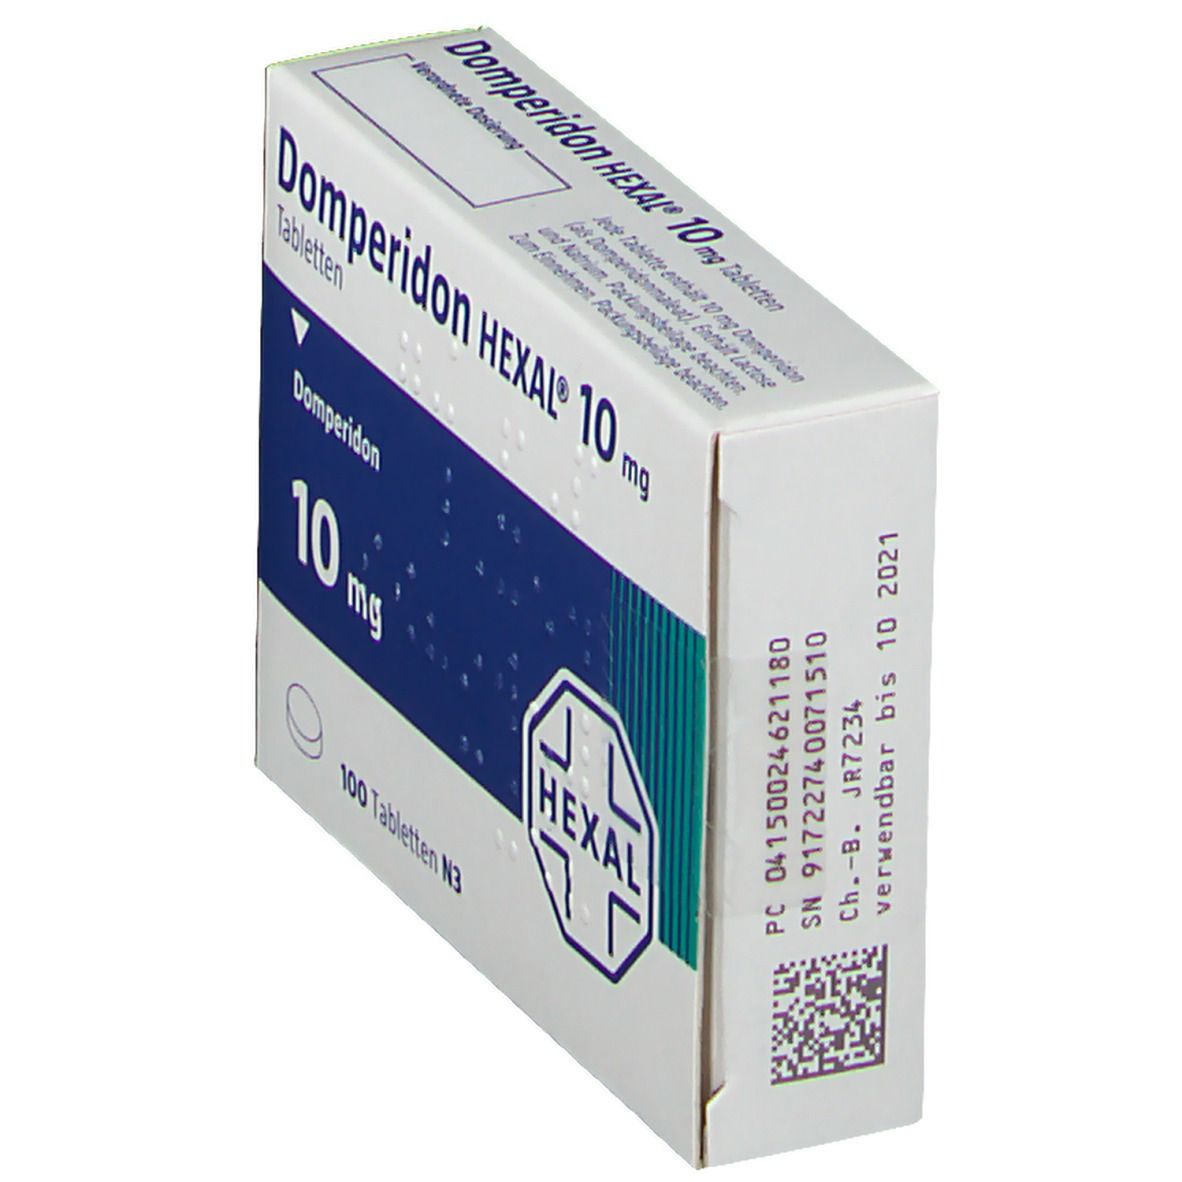 Domperidon HEXAL® 10 mg